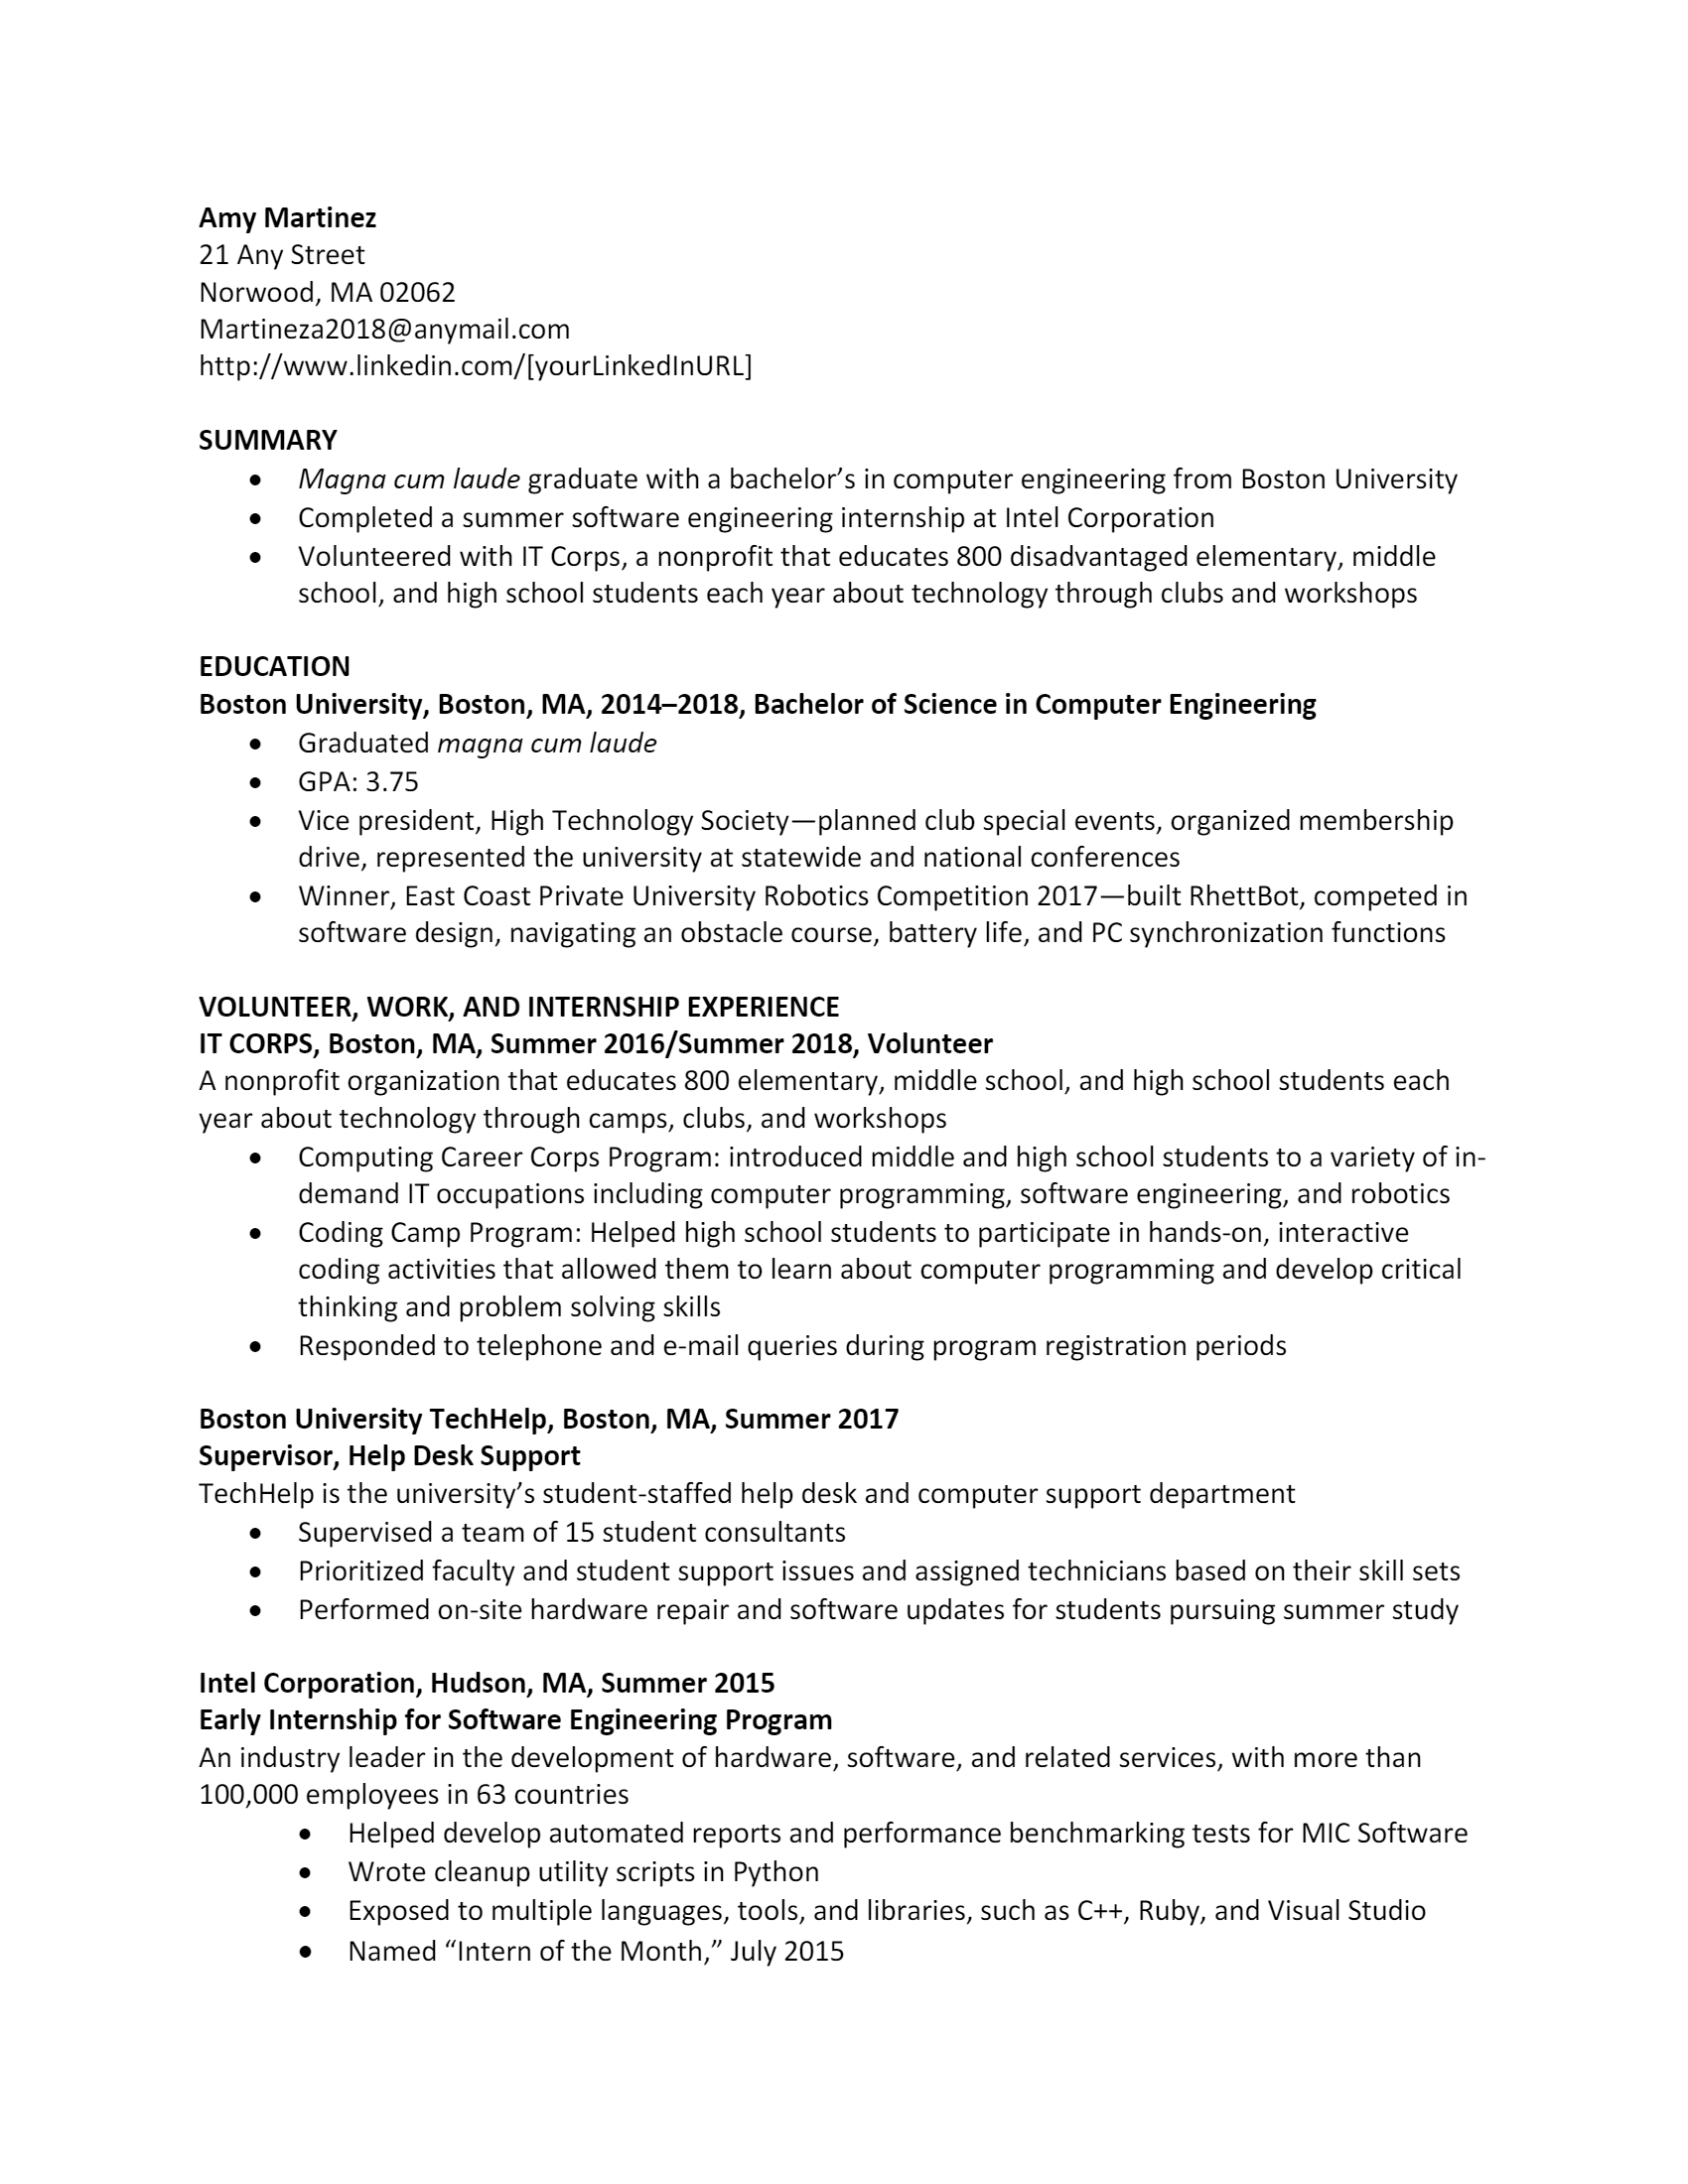 Computer Engineer Resume .Docx (Word)